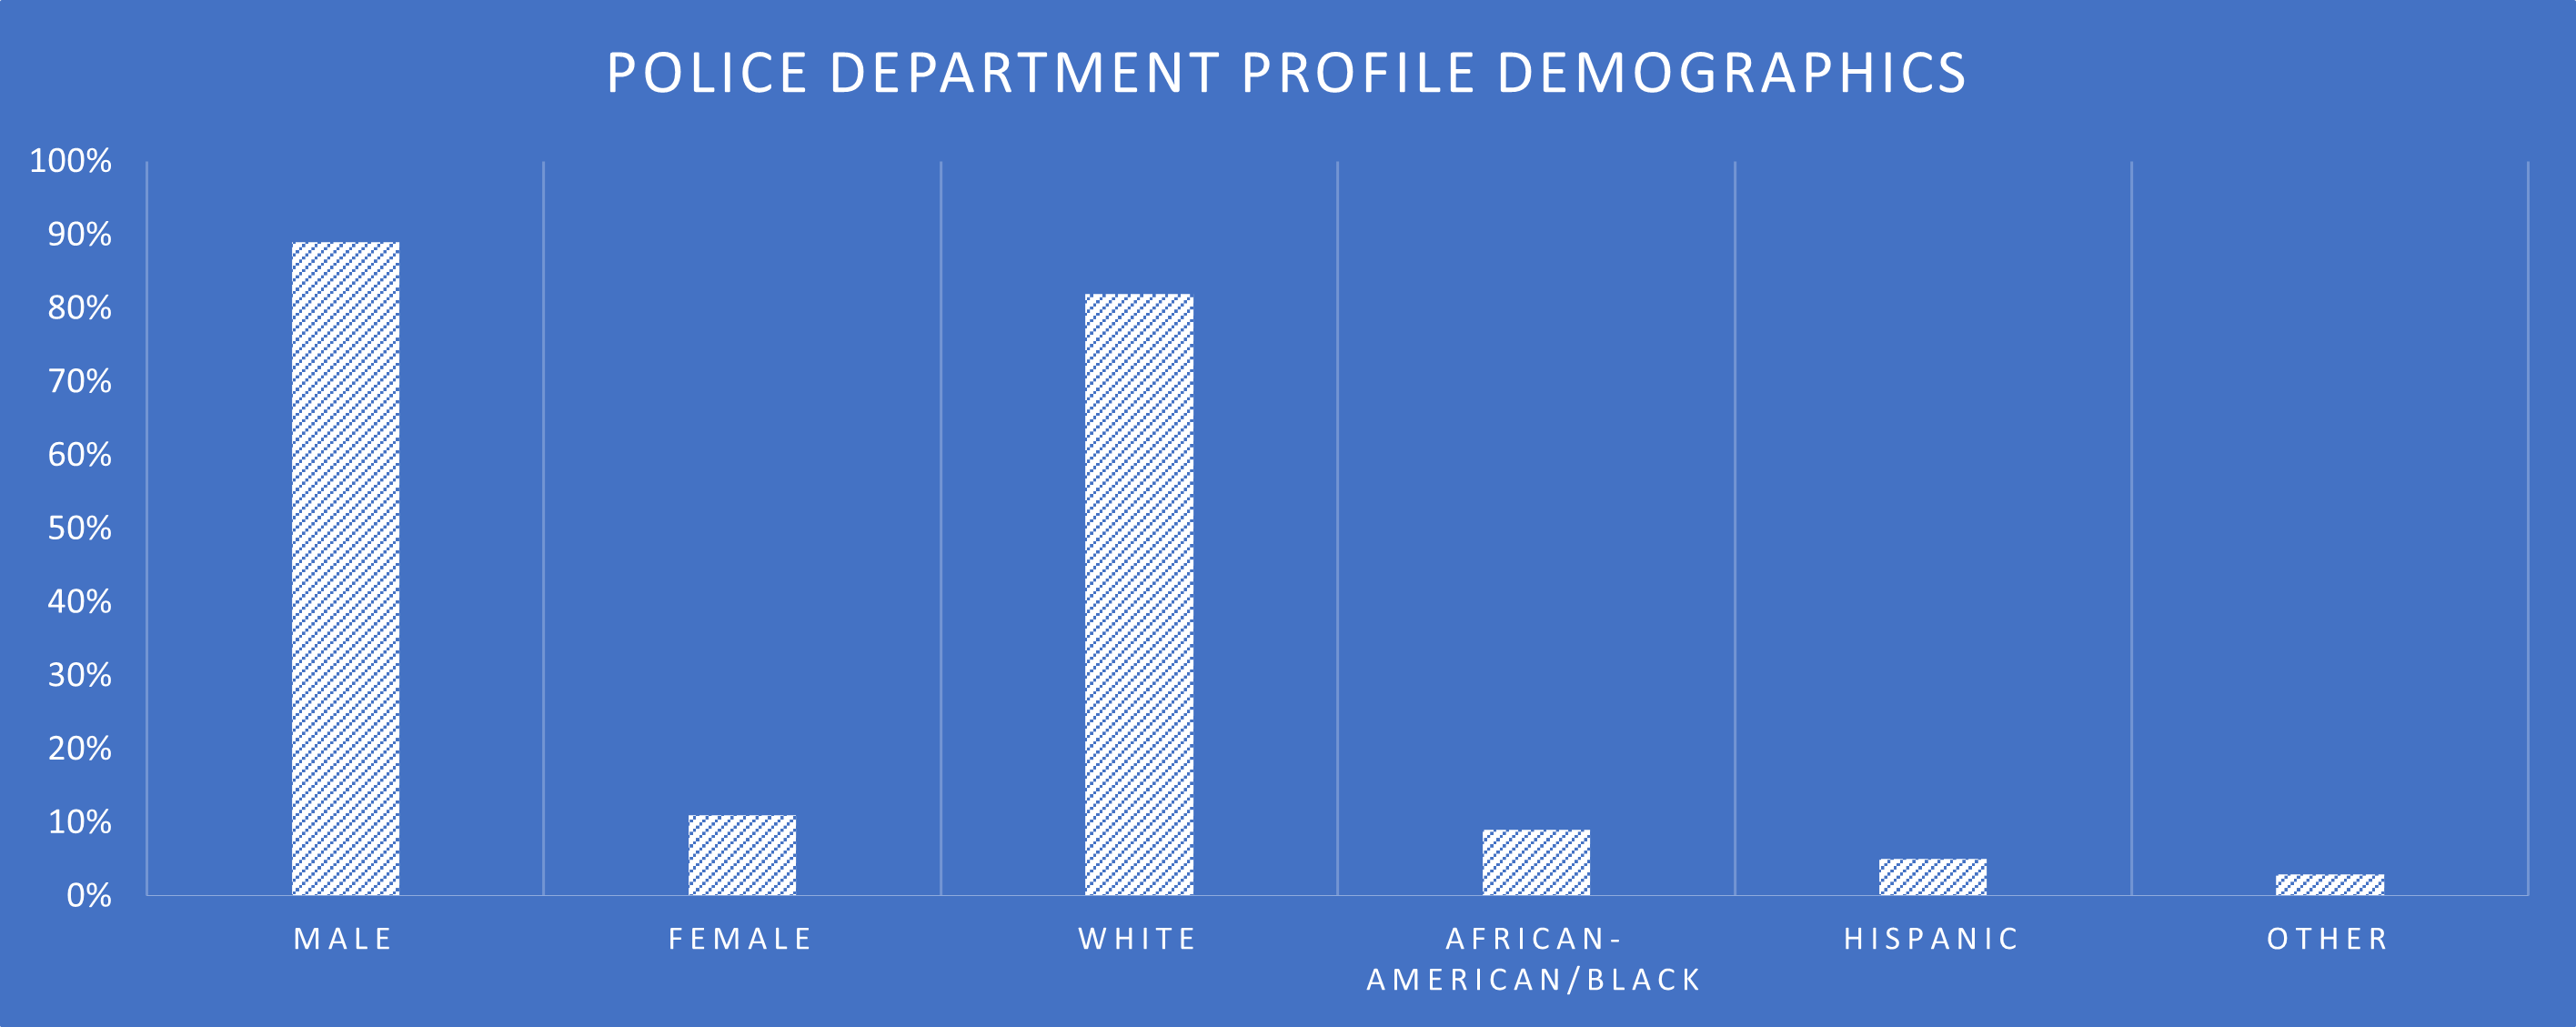 Wichita Police Department Demographics